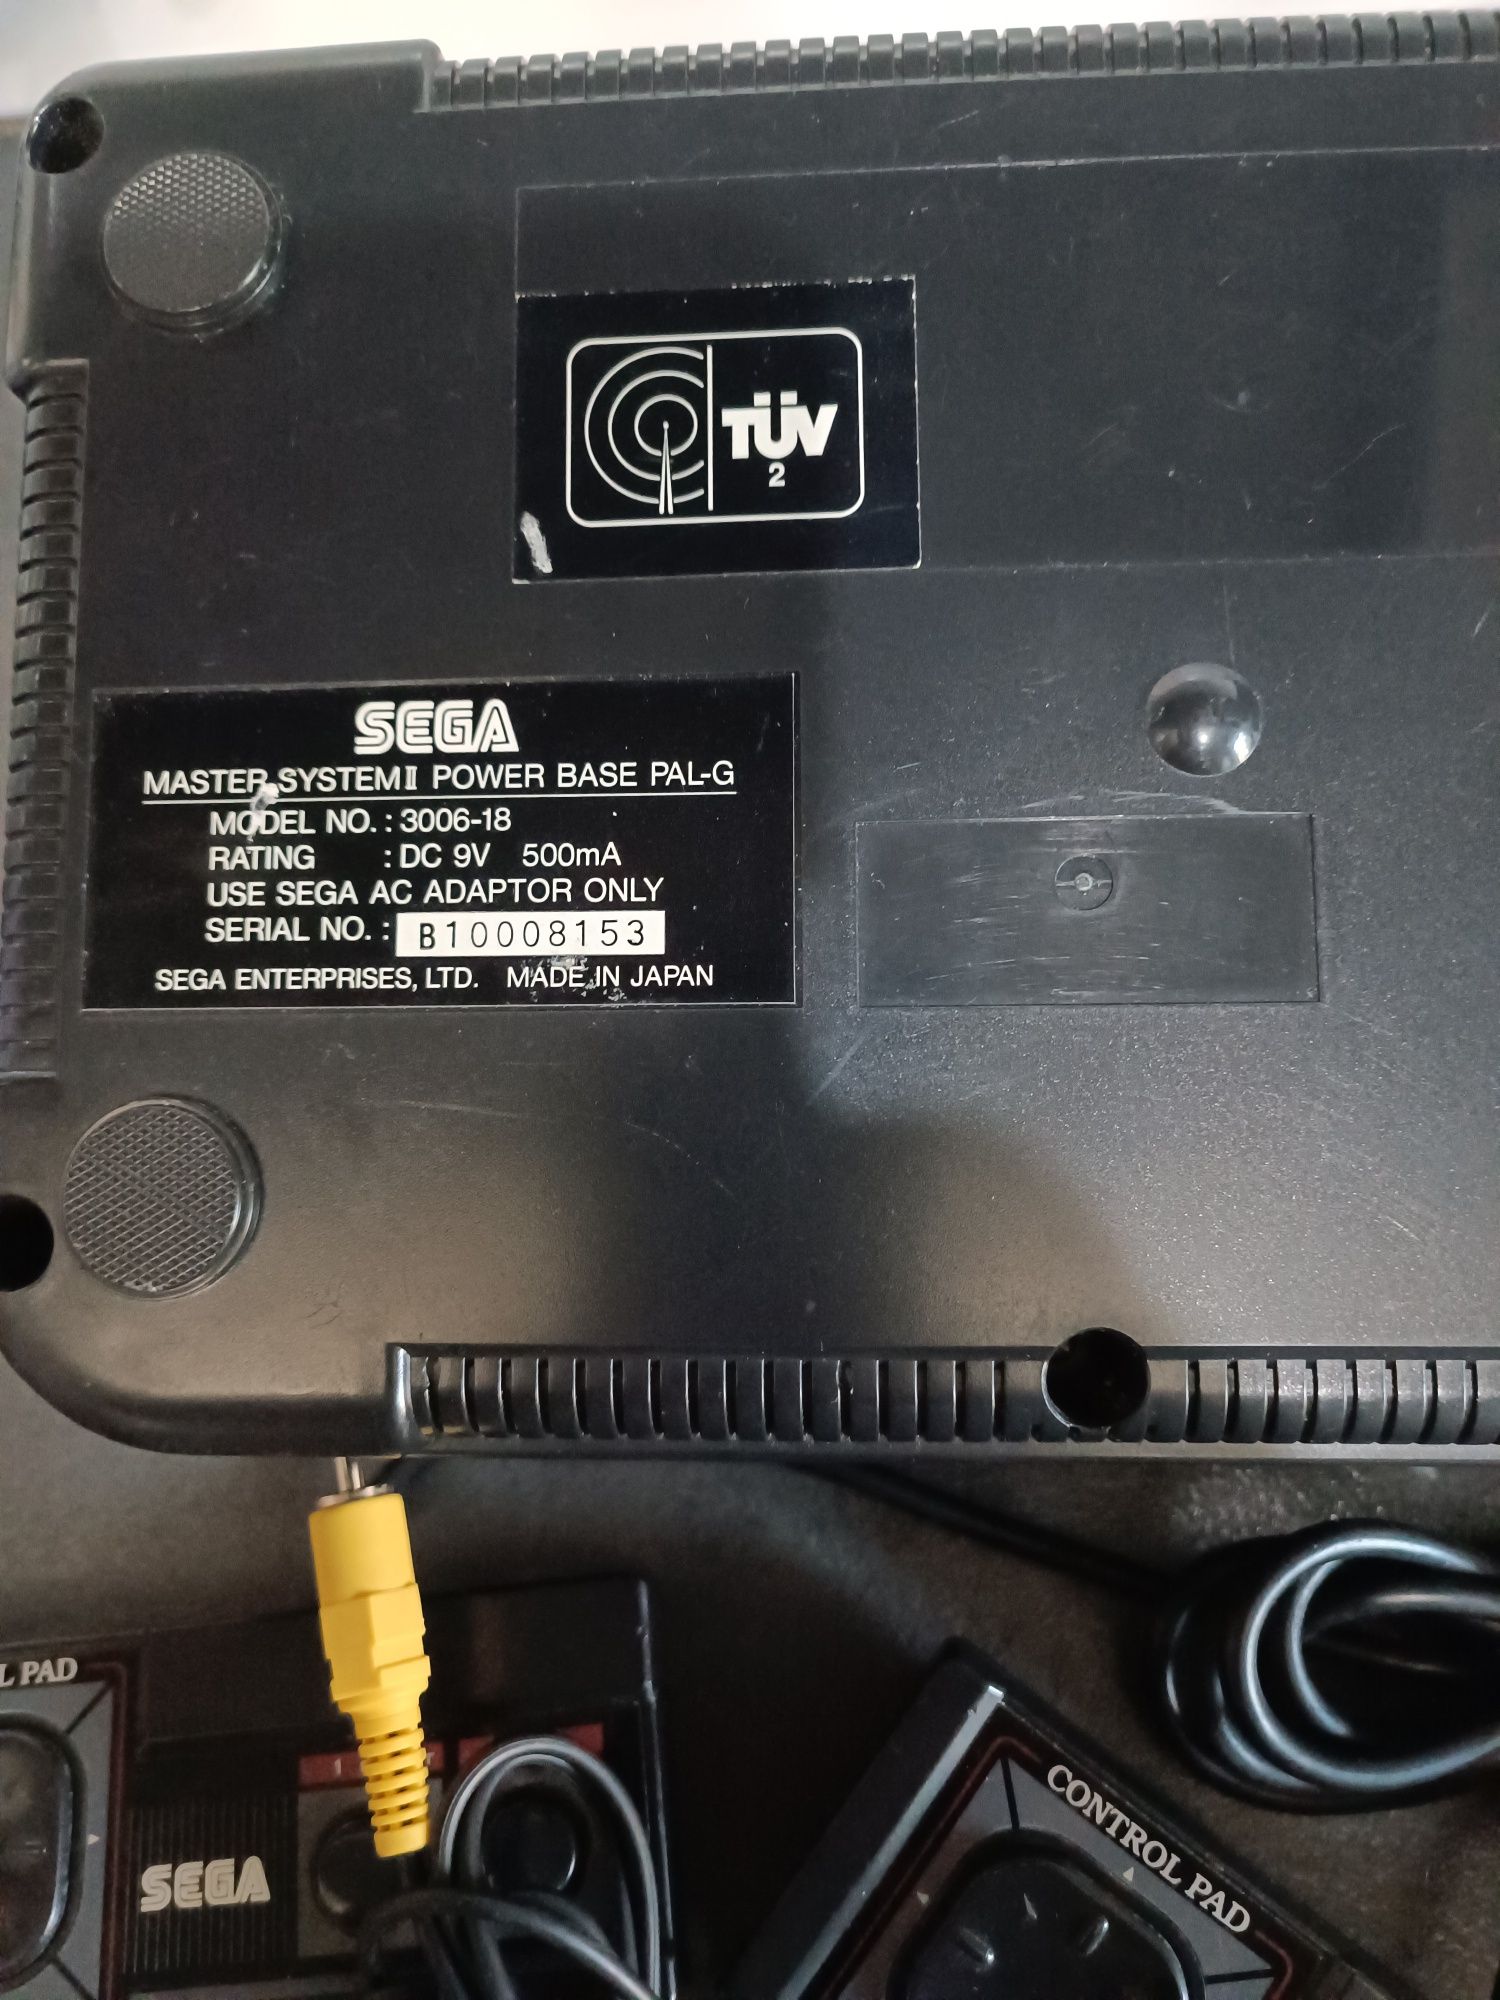 Consola Sega Master System II